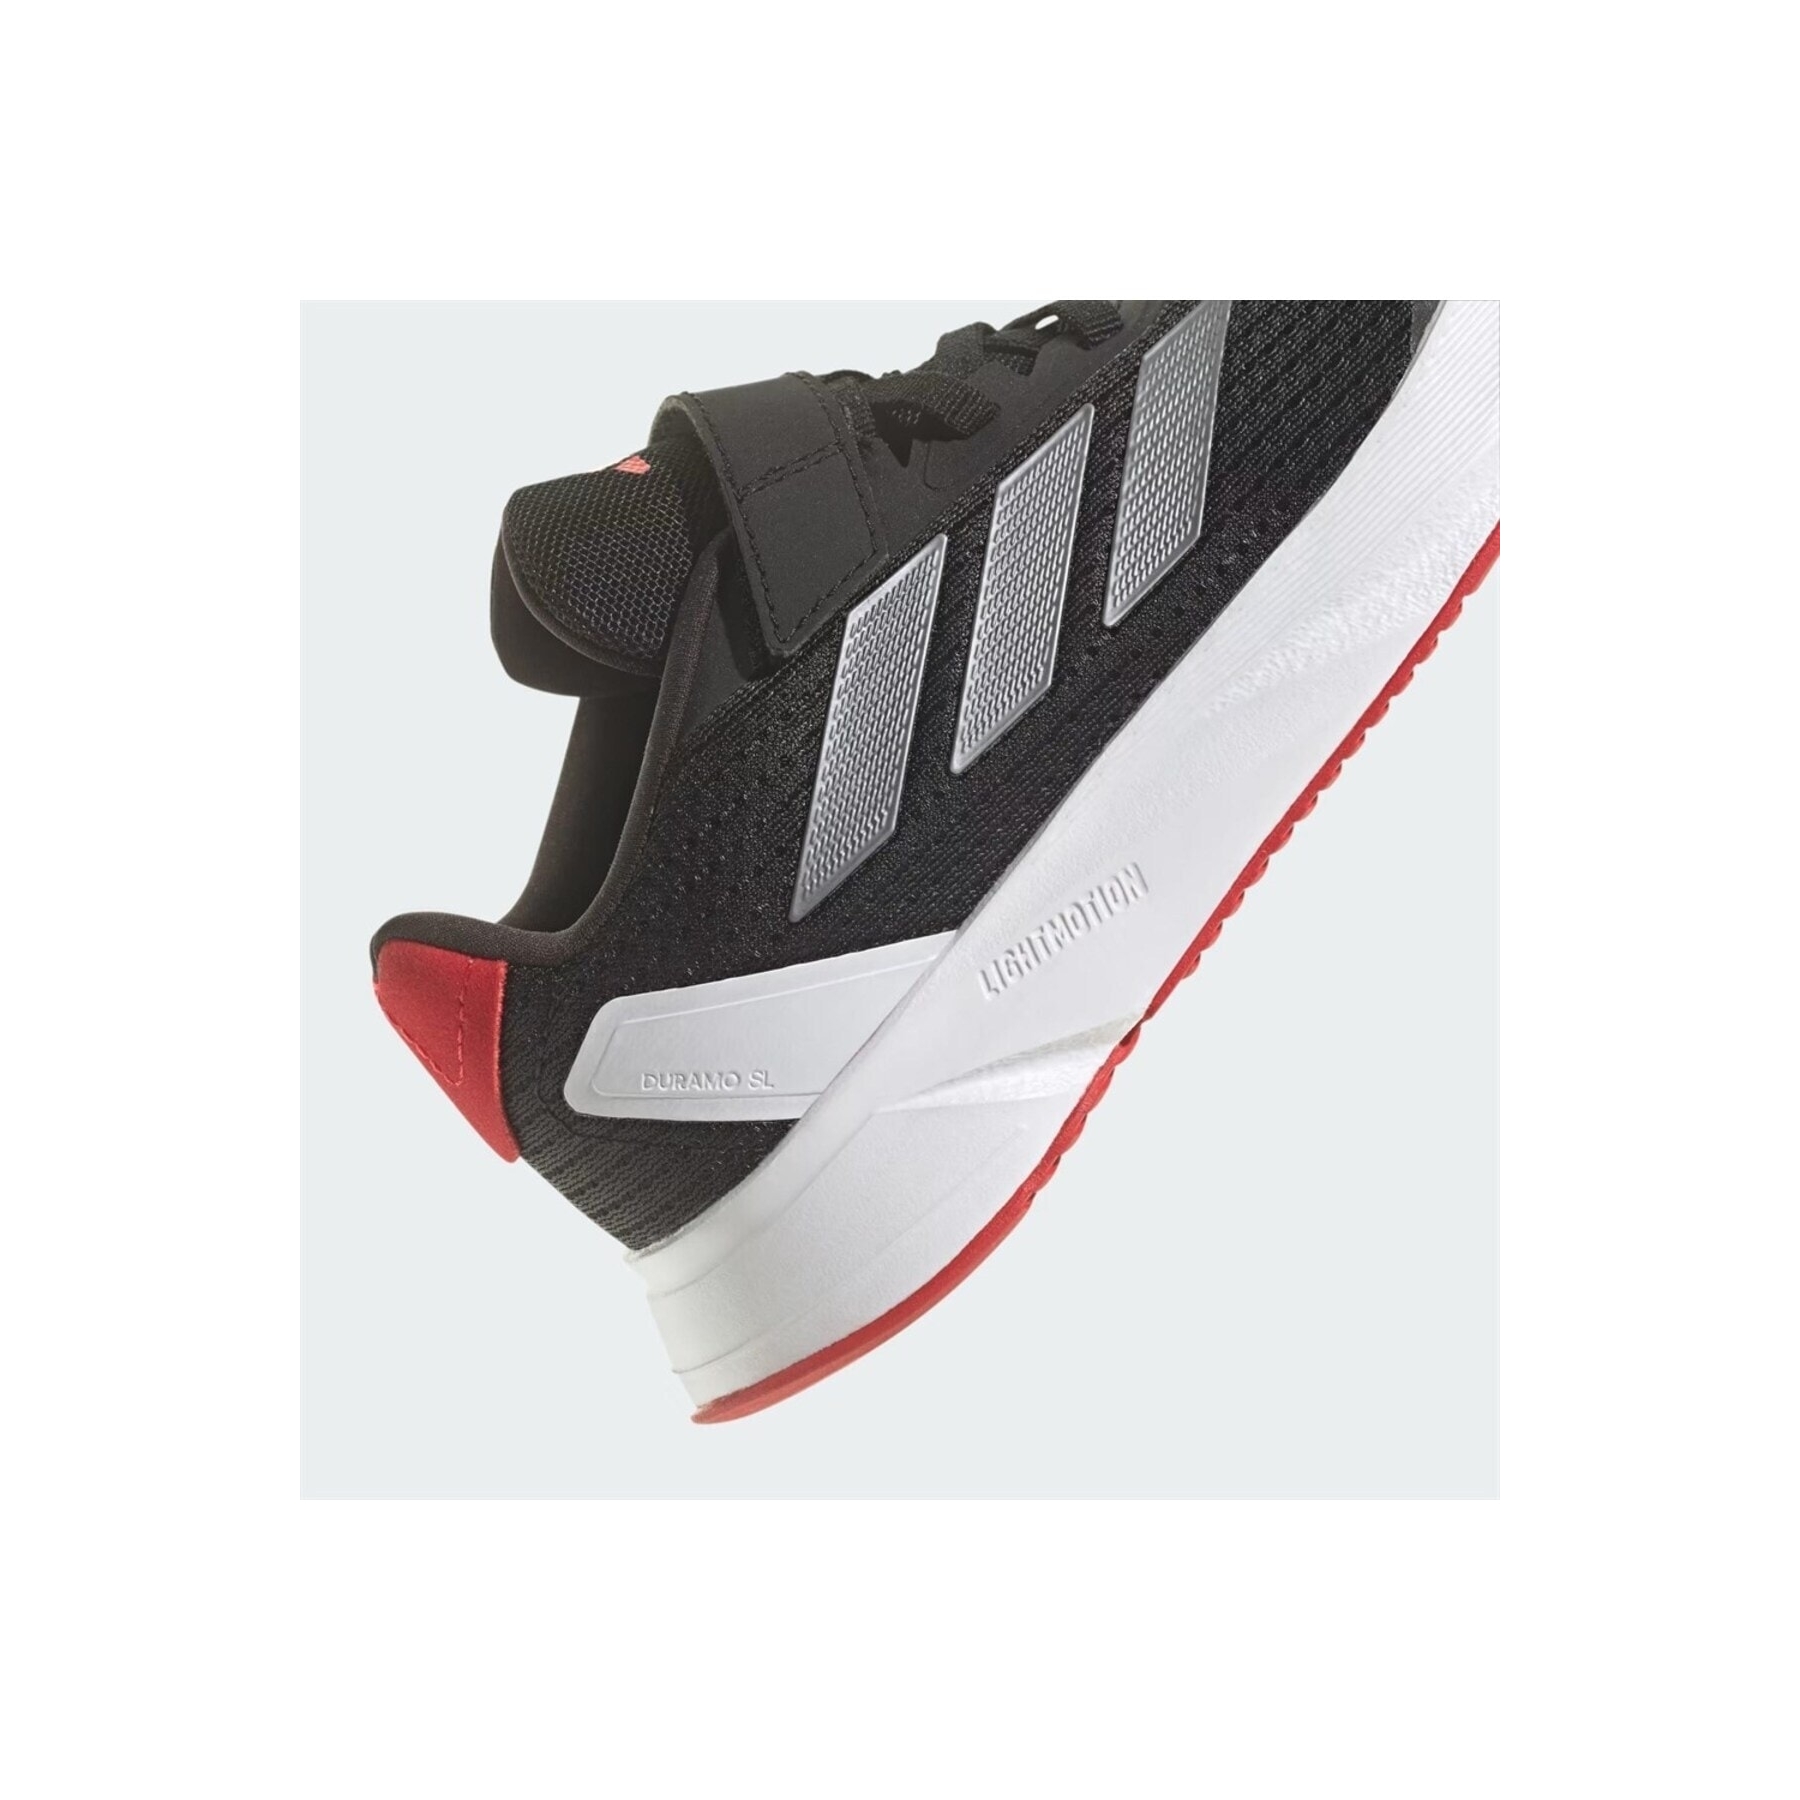 adidas Duramo Çocuk Siyah Spor Ayakkabı (IG2462)